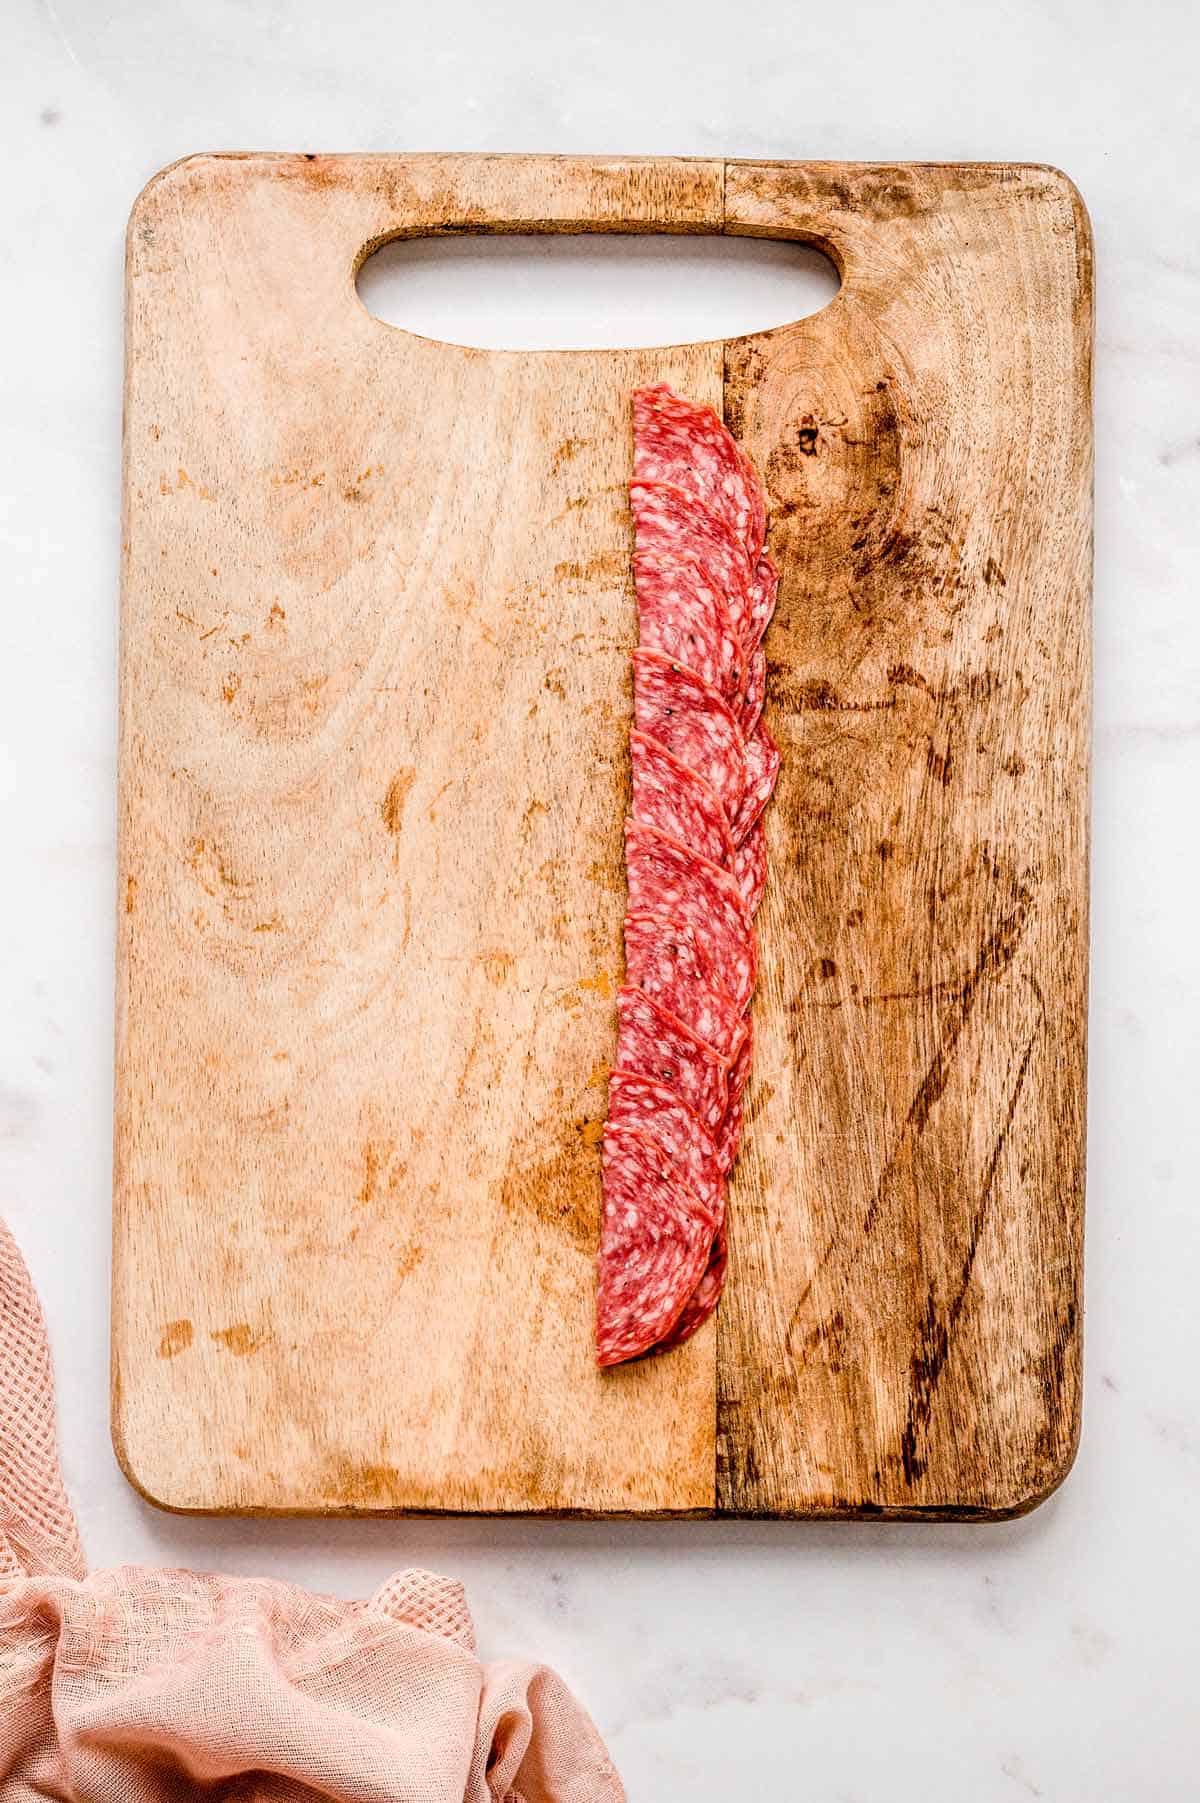 Salami slices cut in half on a wooden cutting board.